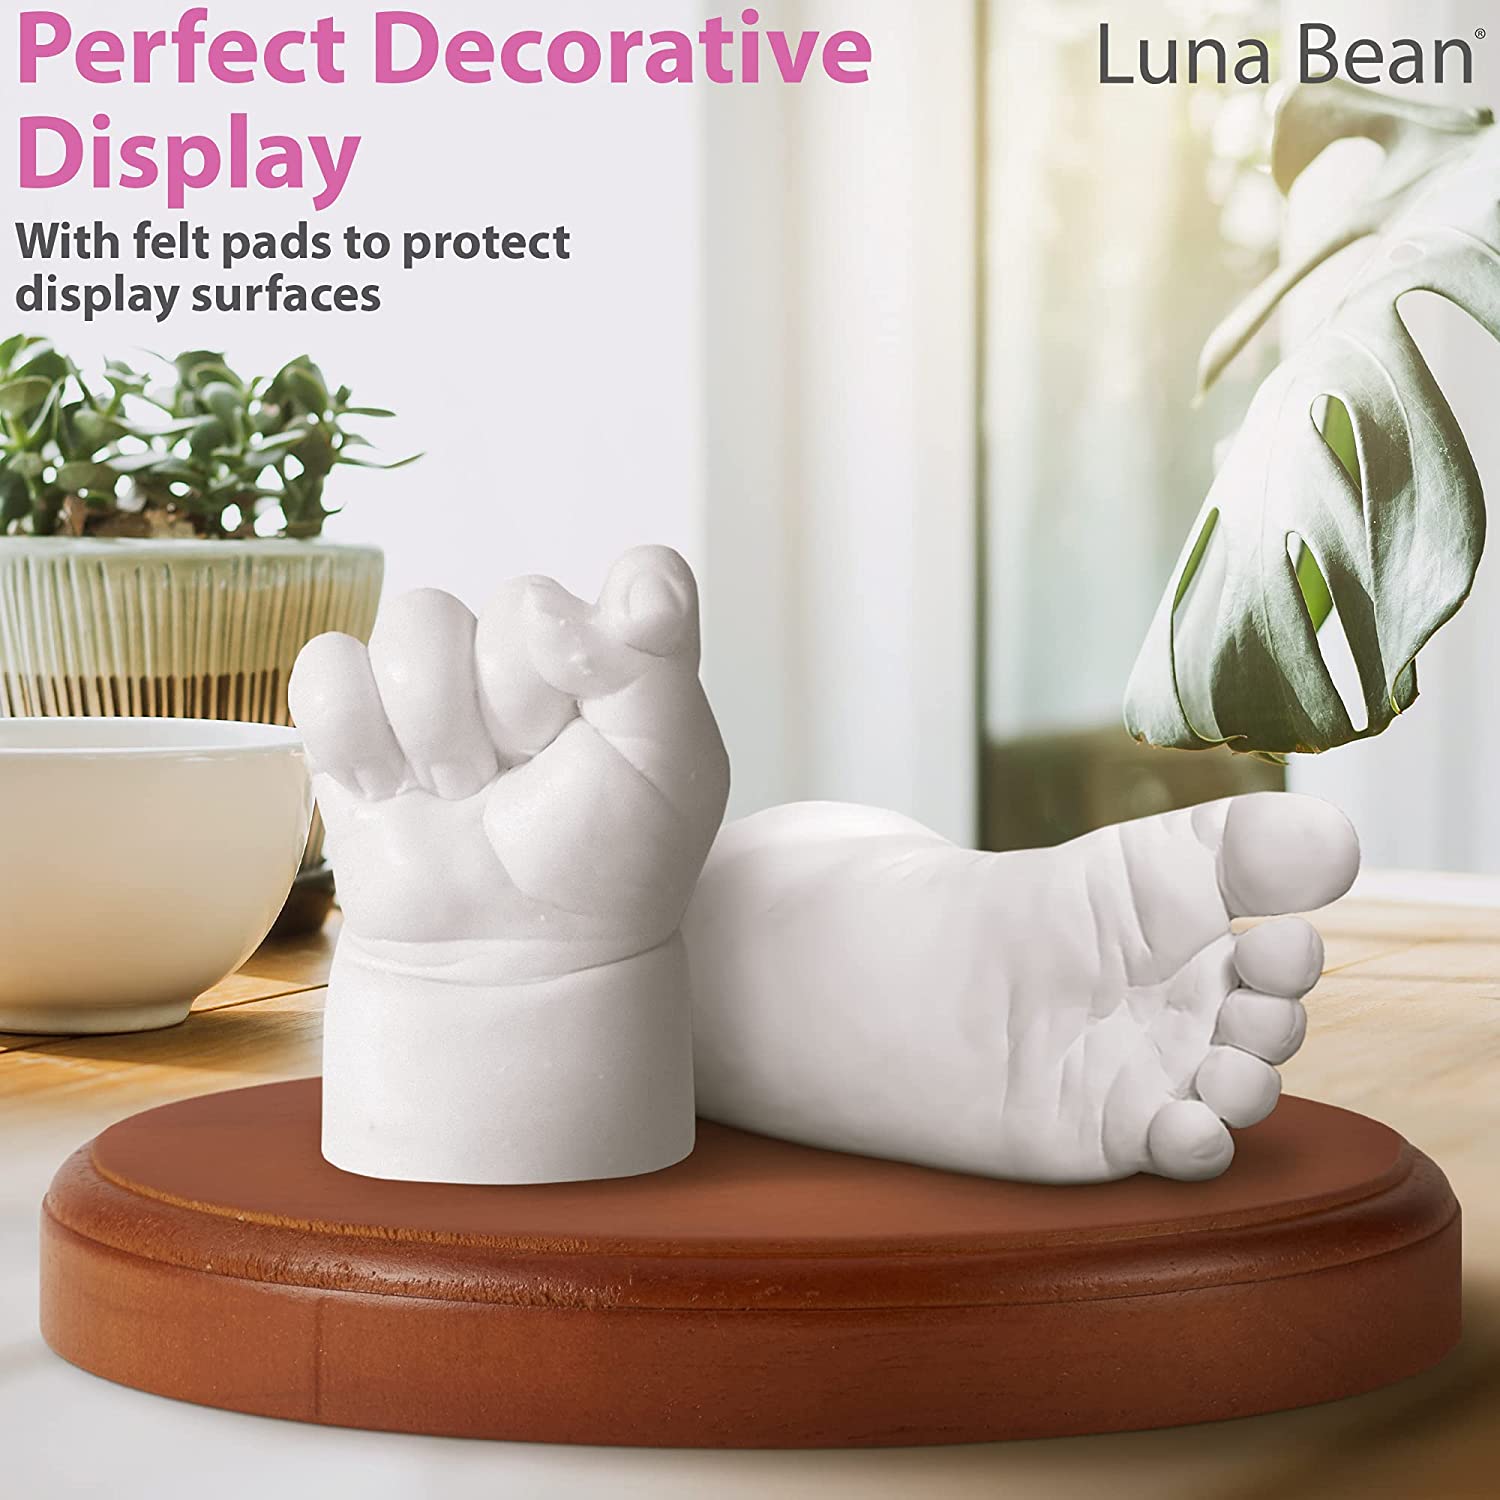 Luna Bean Round Wood Base - Hand Casting Sculpture Base for Luna Bean Hand  Casting Kit - 6 Round Solid Wood Keepsake Display with a Semi-Gloss Finish